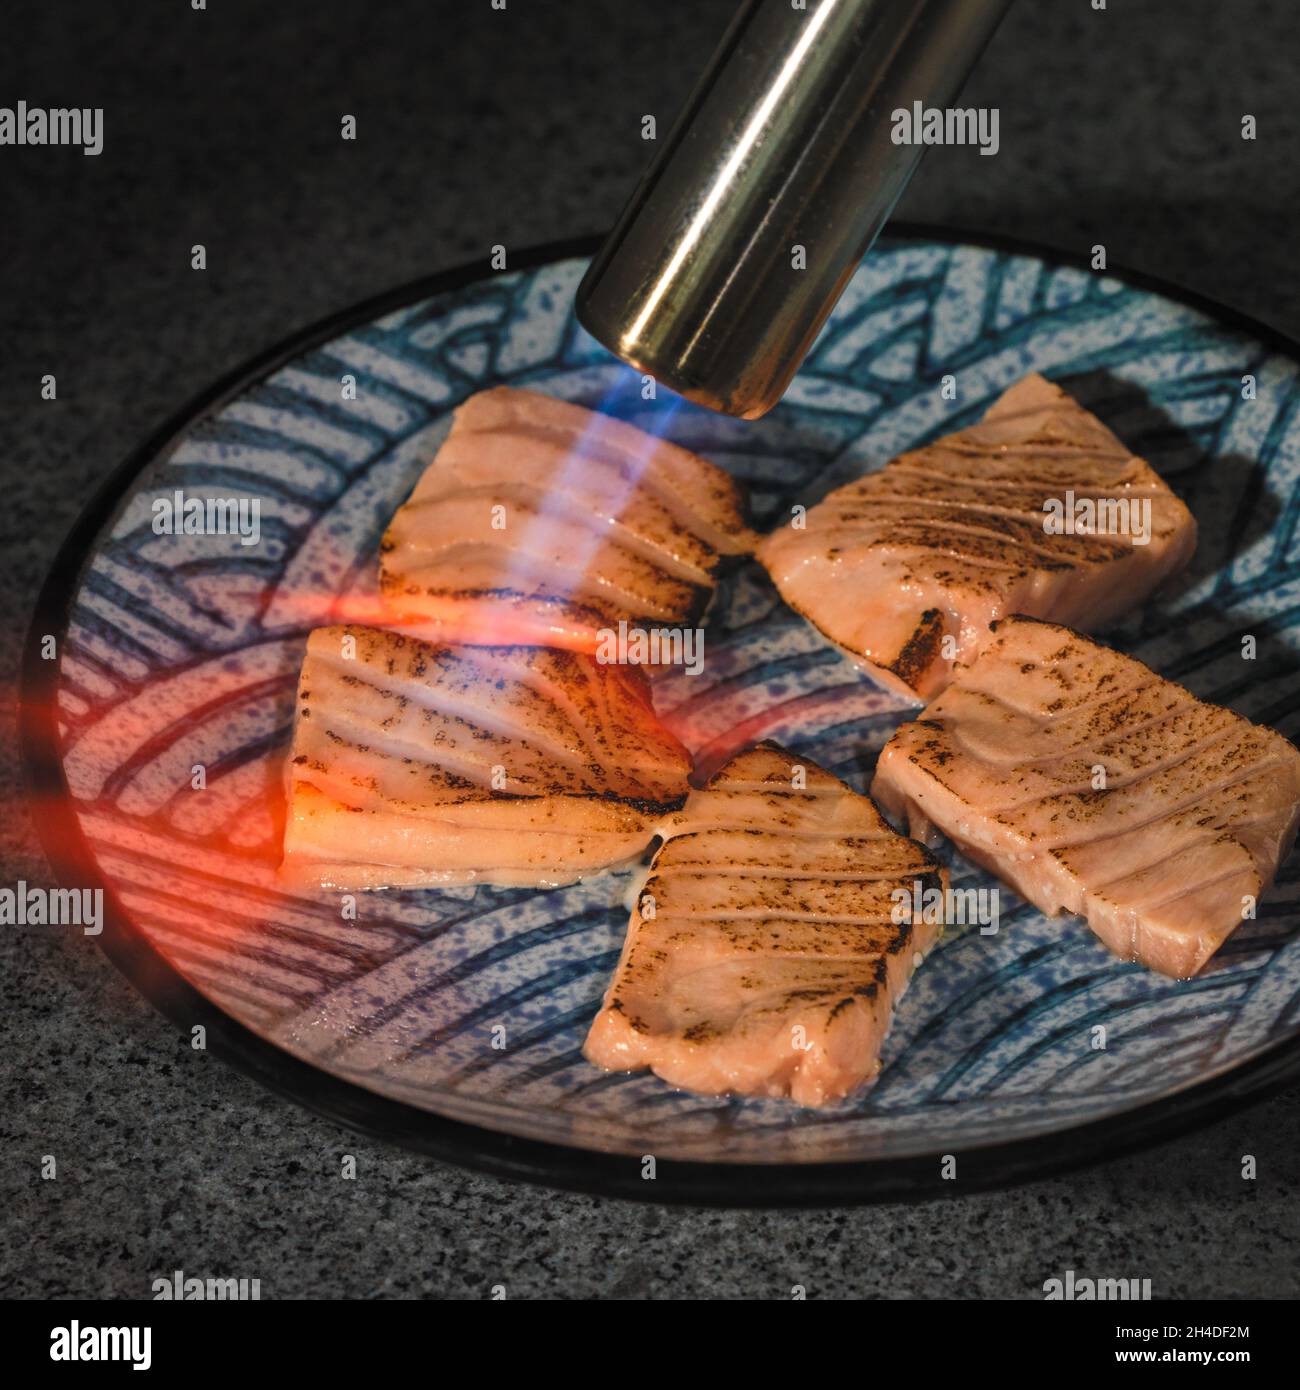 https://c8.alamy.com/comp/2H4DF2M/blow-torch-seared-salmon-2H4DF2M.jpg